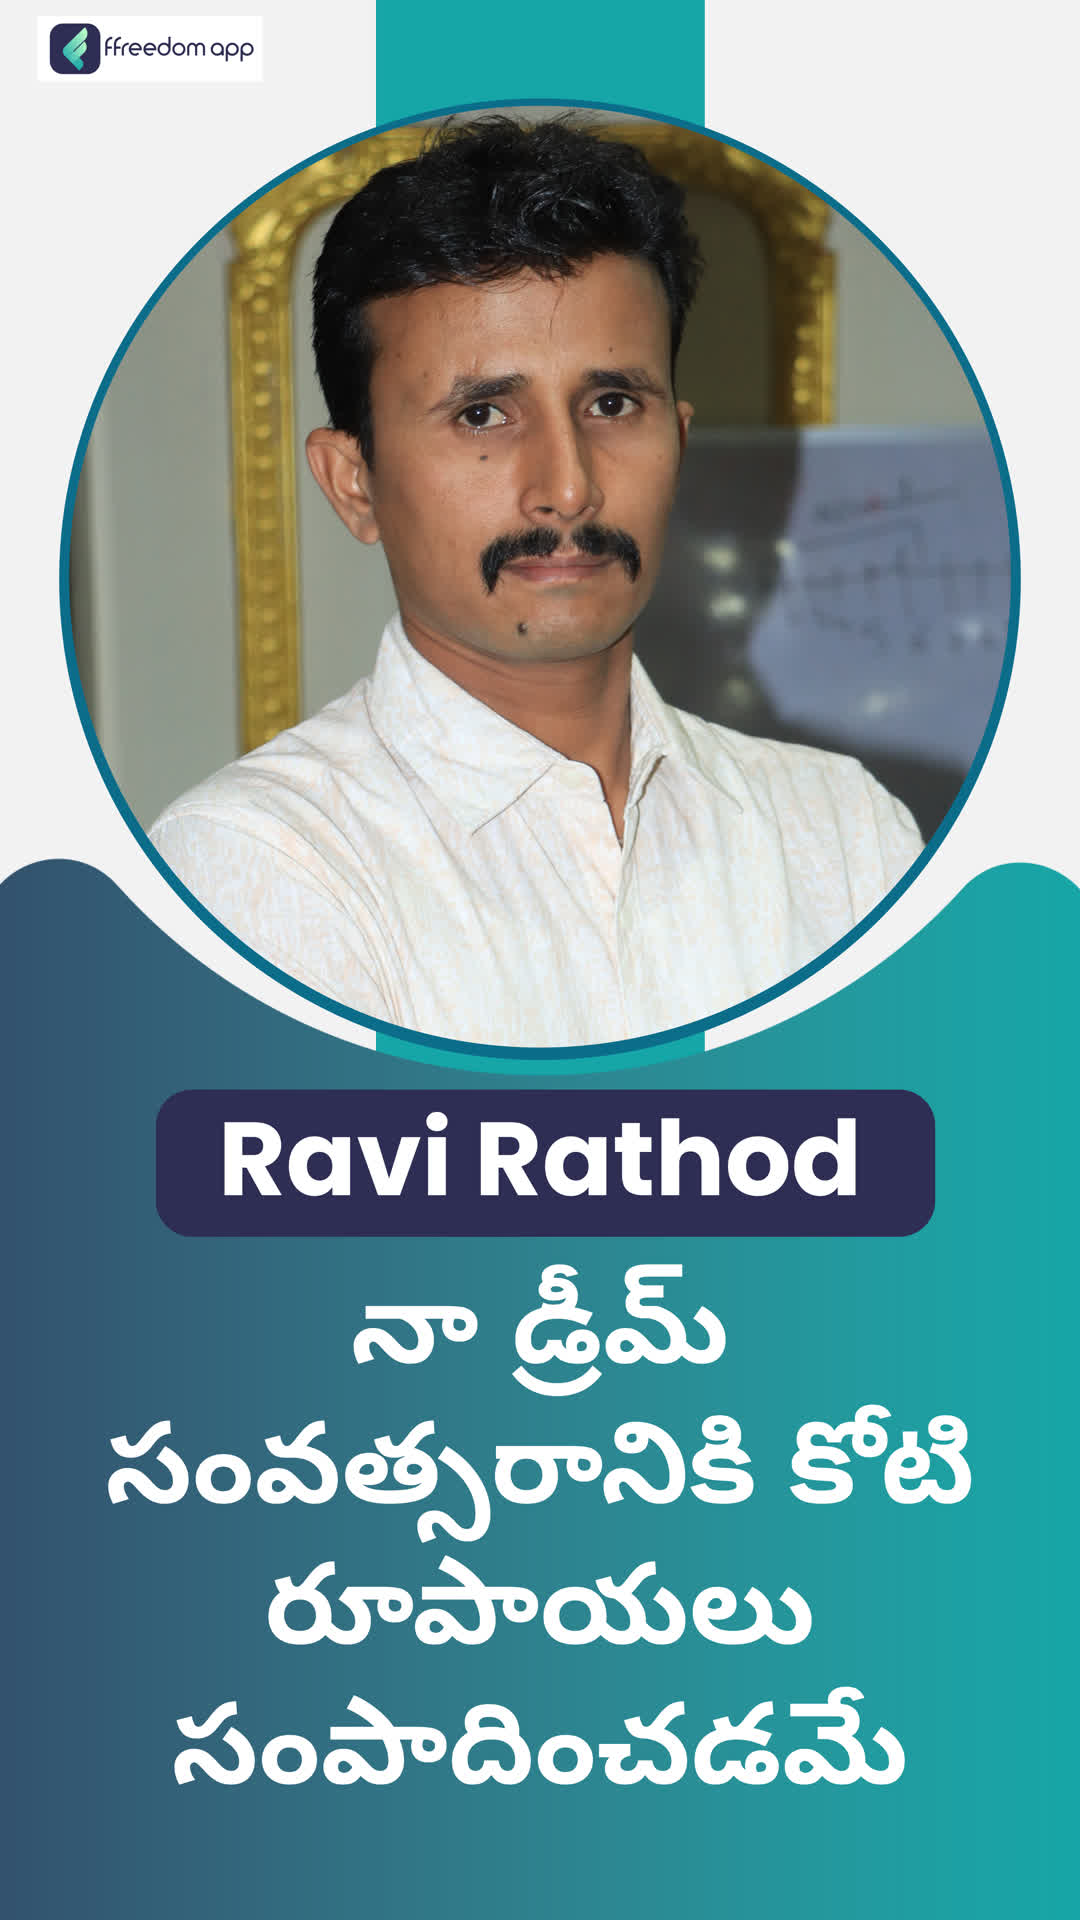 Ravi Rathod's Honest Review of ffreedom app - Hyderabad ,Telangana